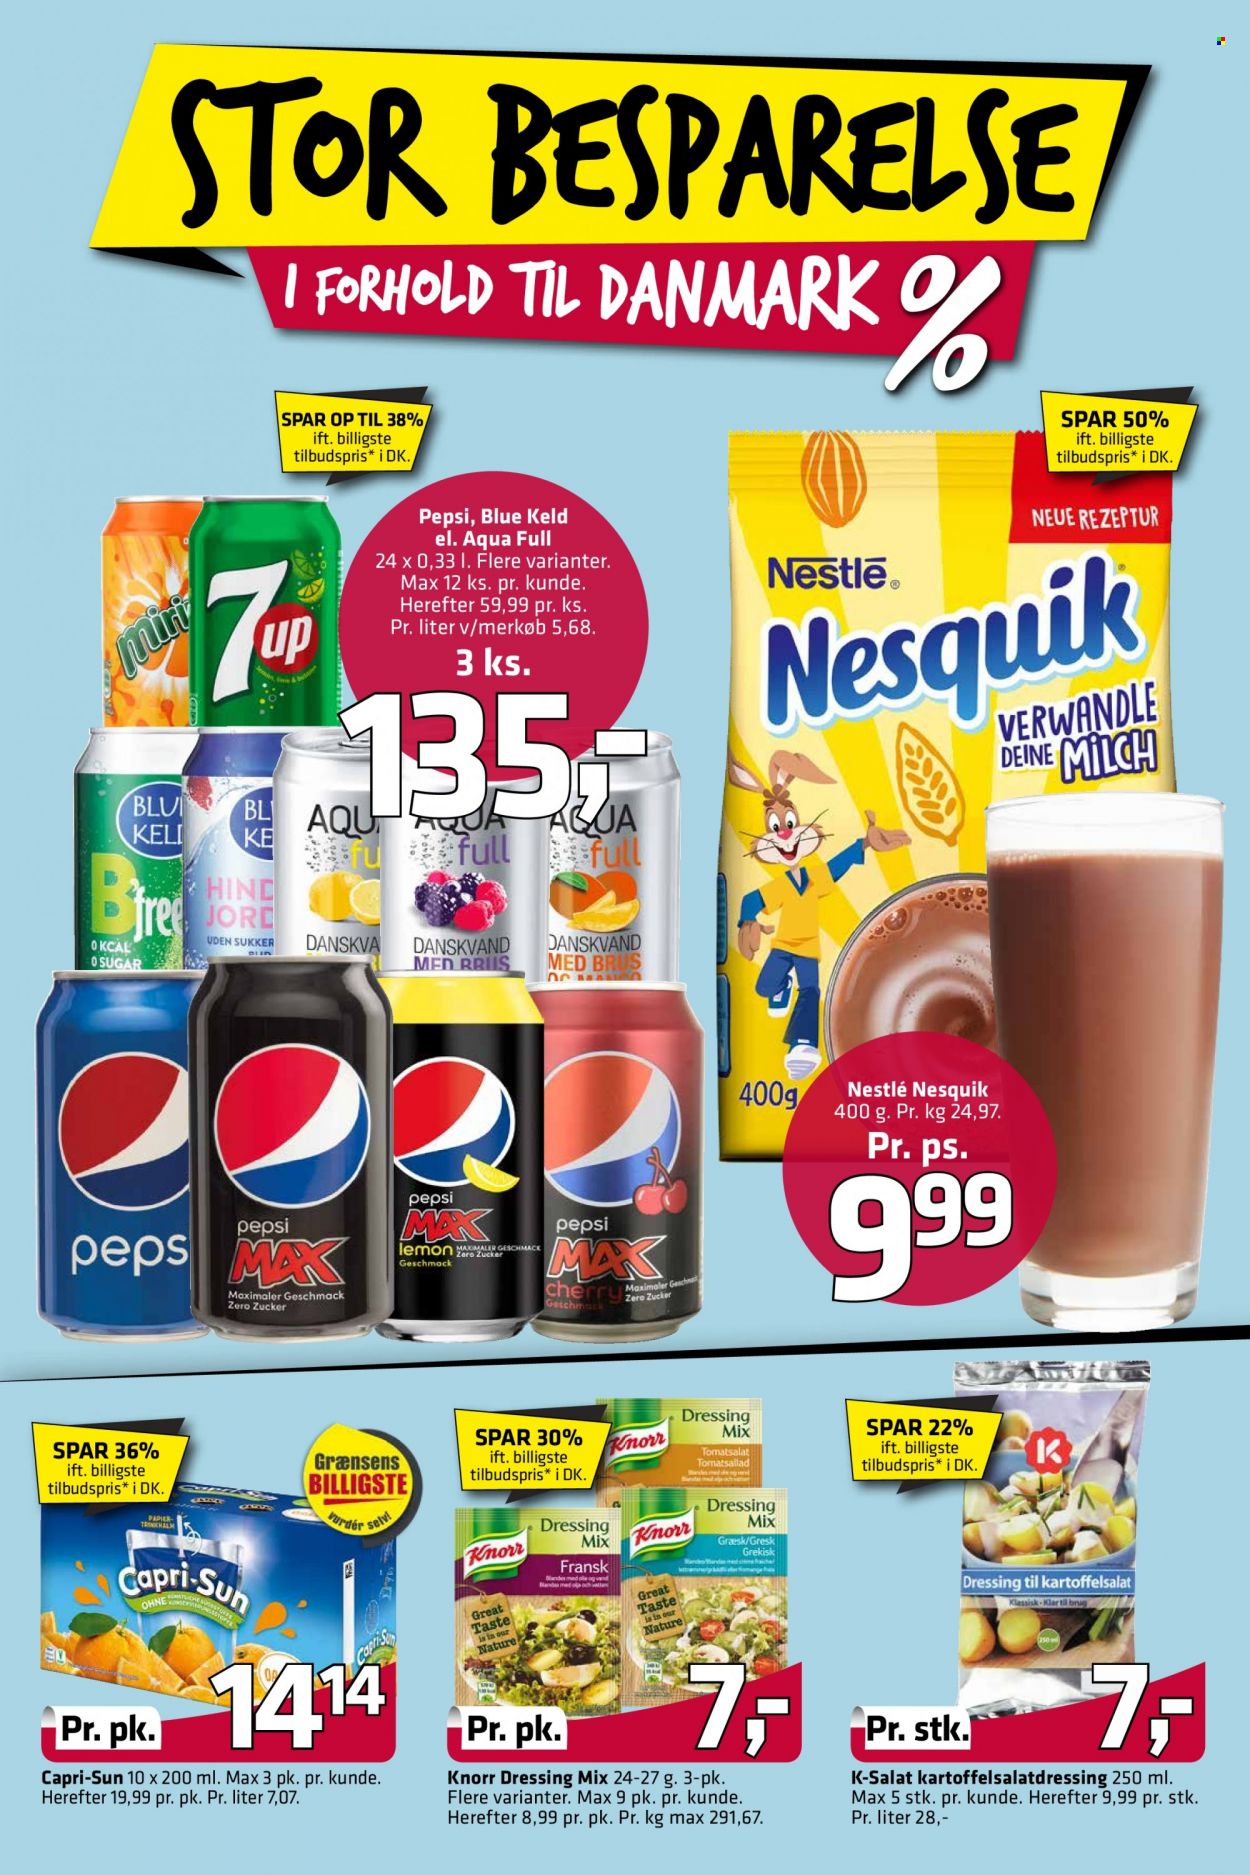 thumbnail - Fleggaard tilbud  - 8.6.2022 - 28.6.2022 - tilbudsprodukter - Blue Keld, Knorr, salat, kartoffelsalat, Nestlé, dressing, Capri Sun, Pepsi. Side 2.